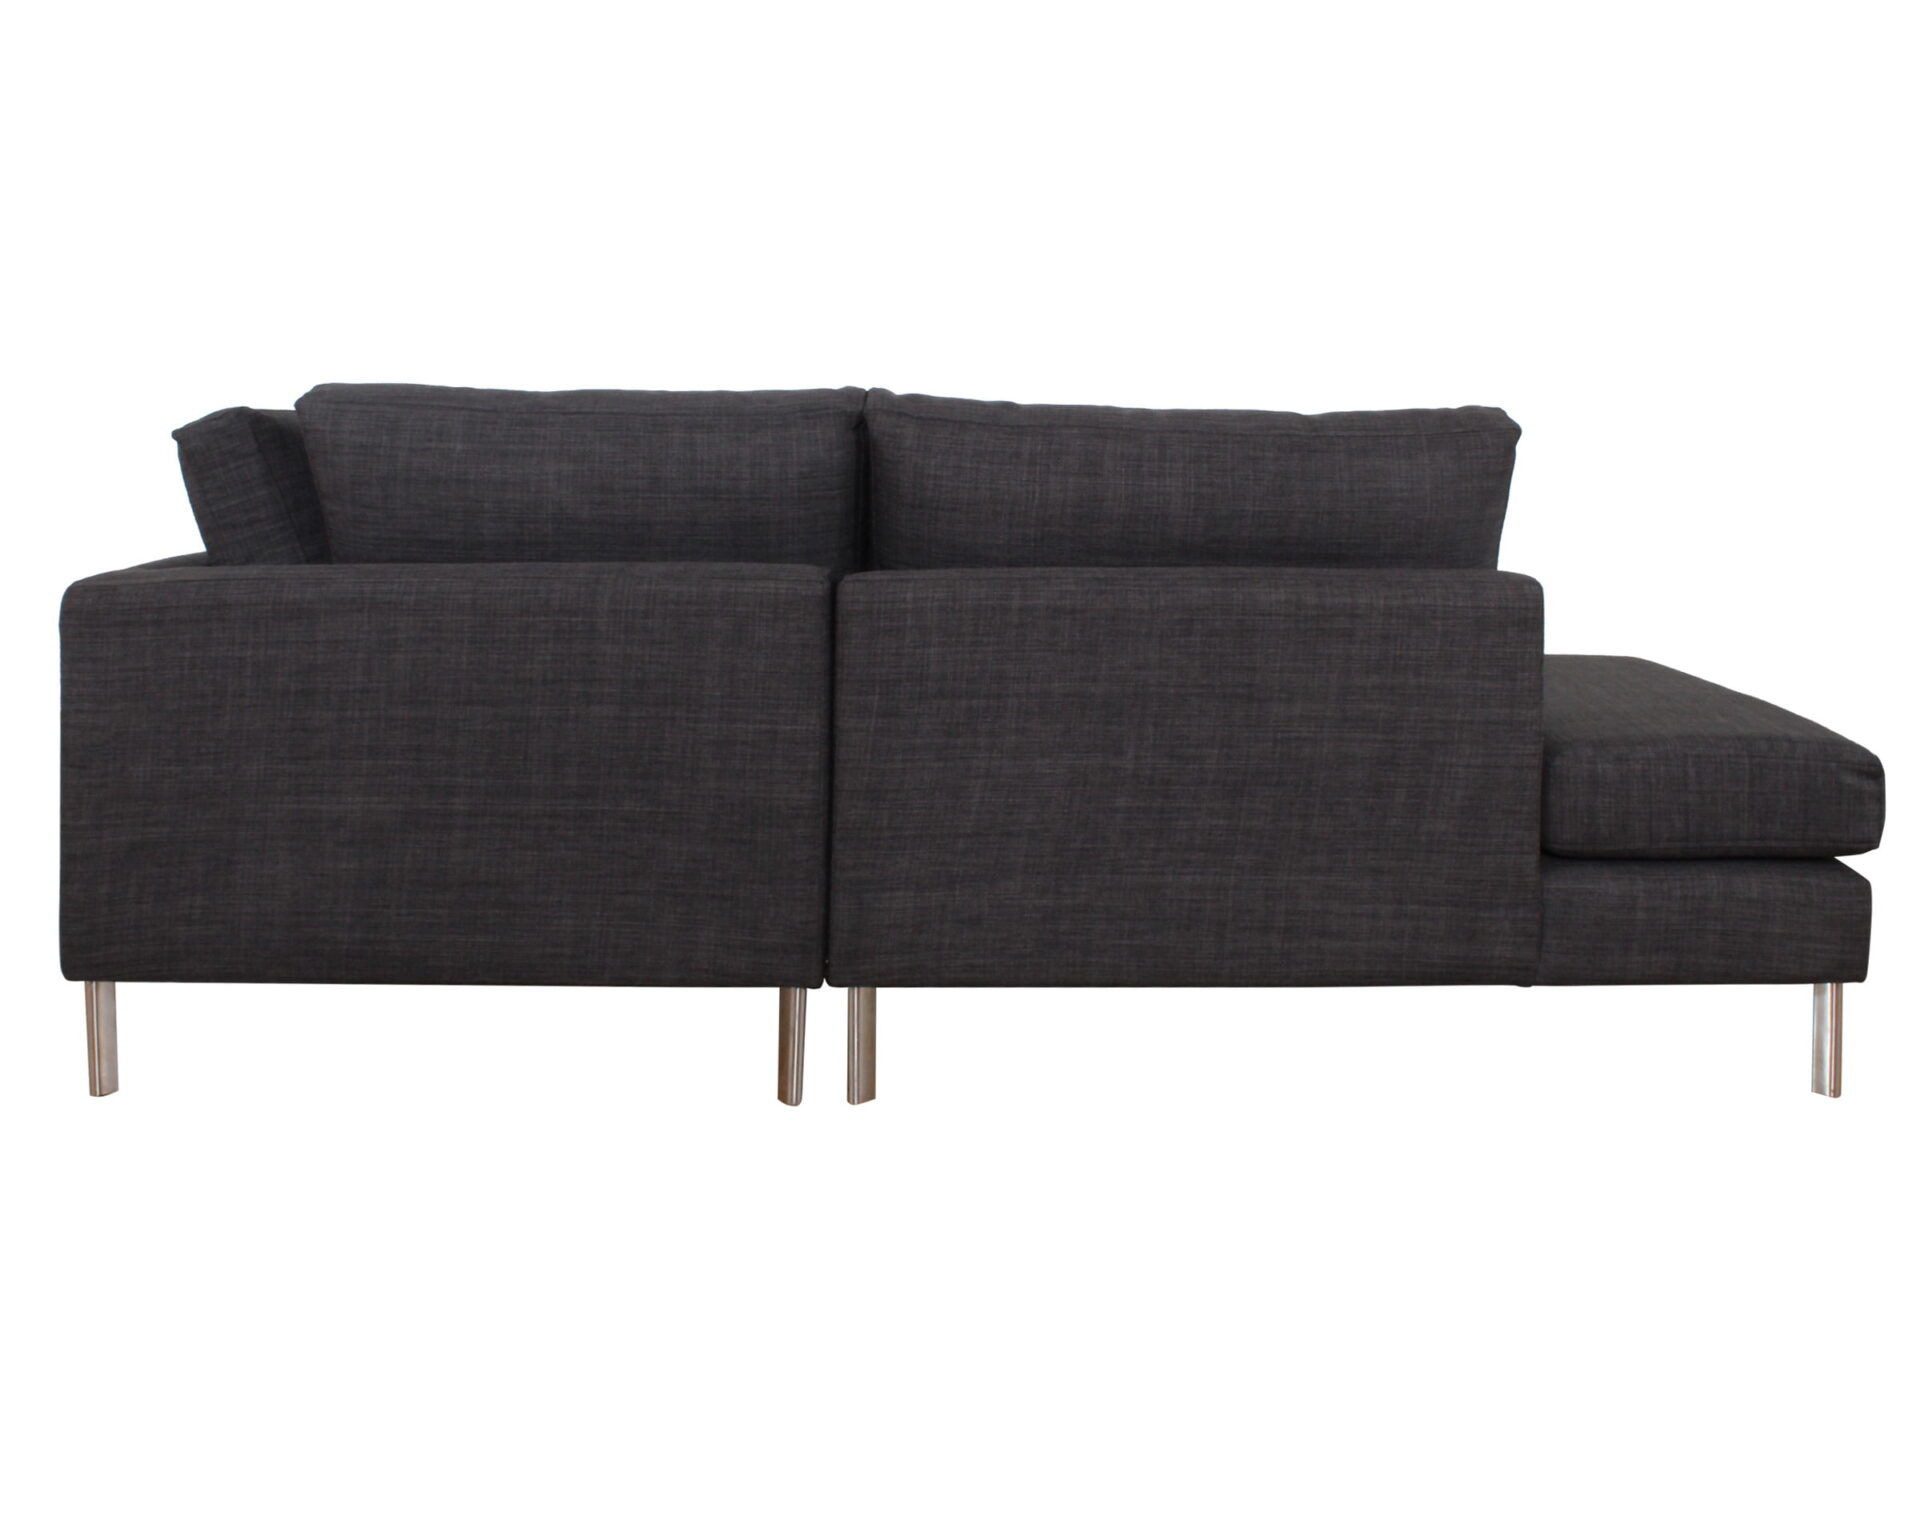 sofa modular izquierdo espacio libre bariloche marengo pata biselada plata 6